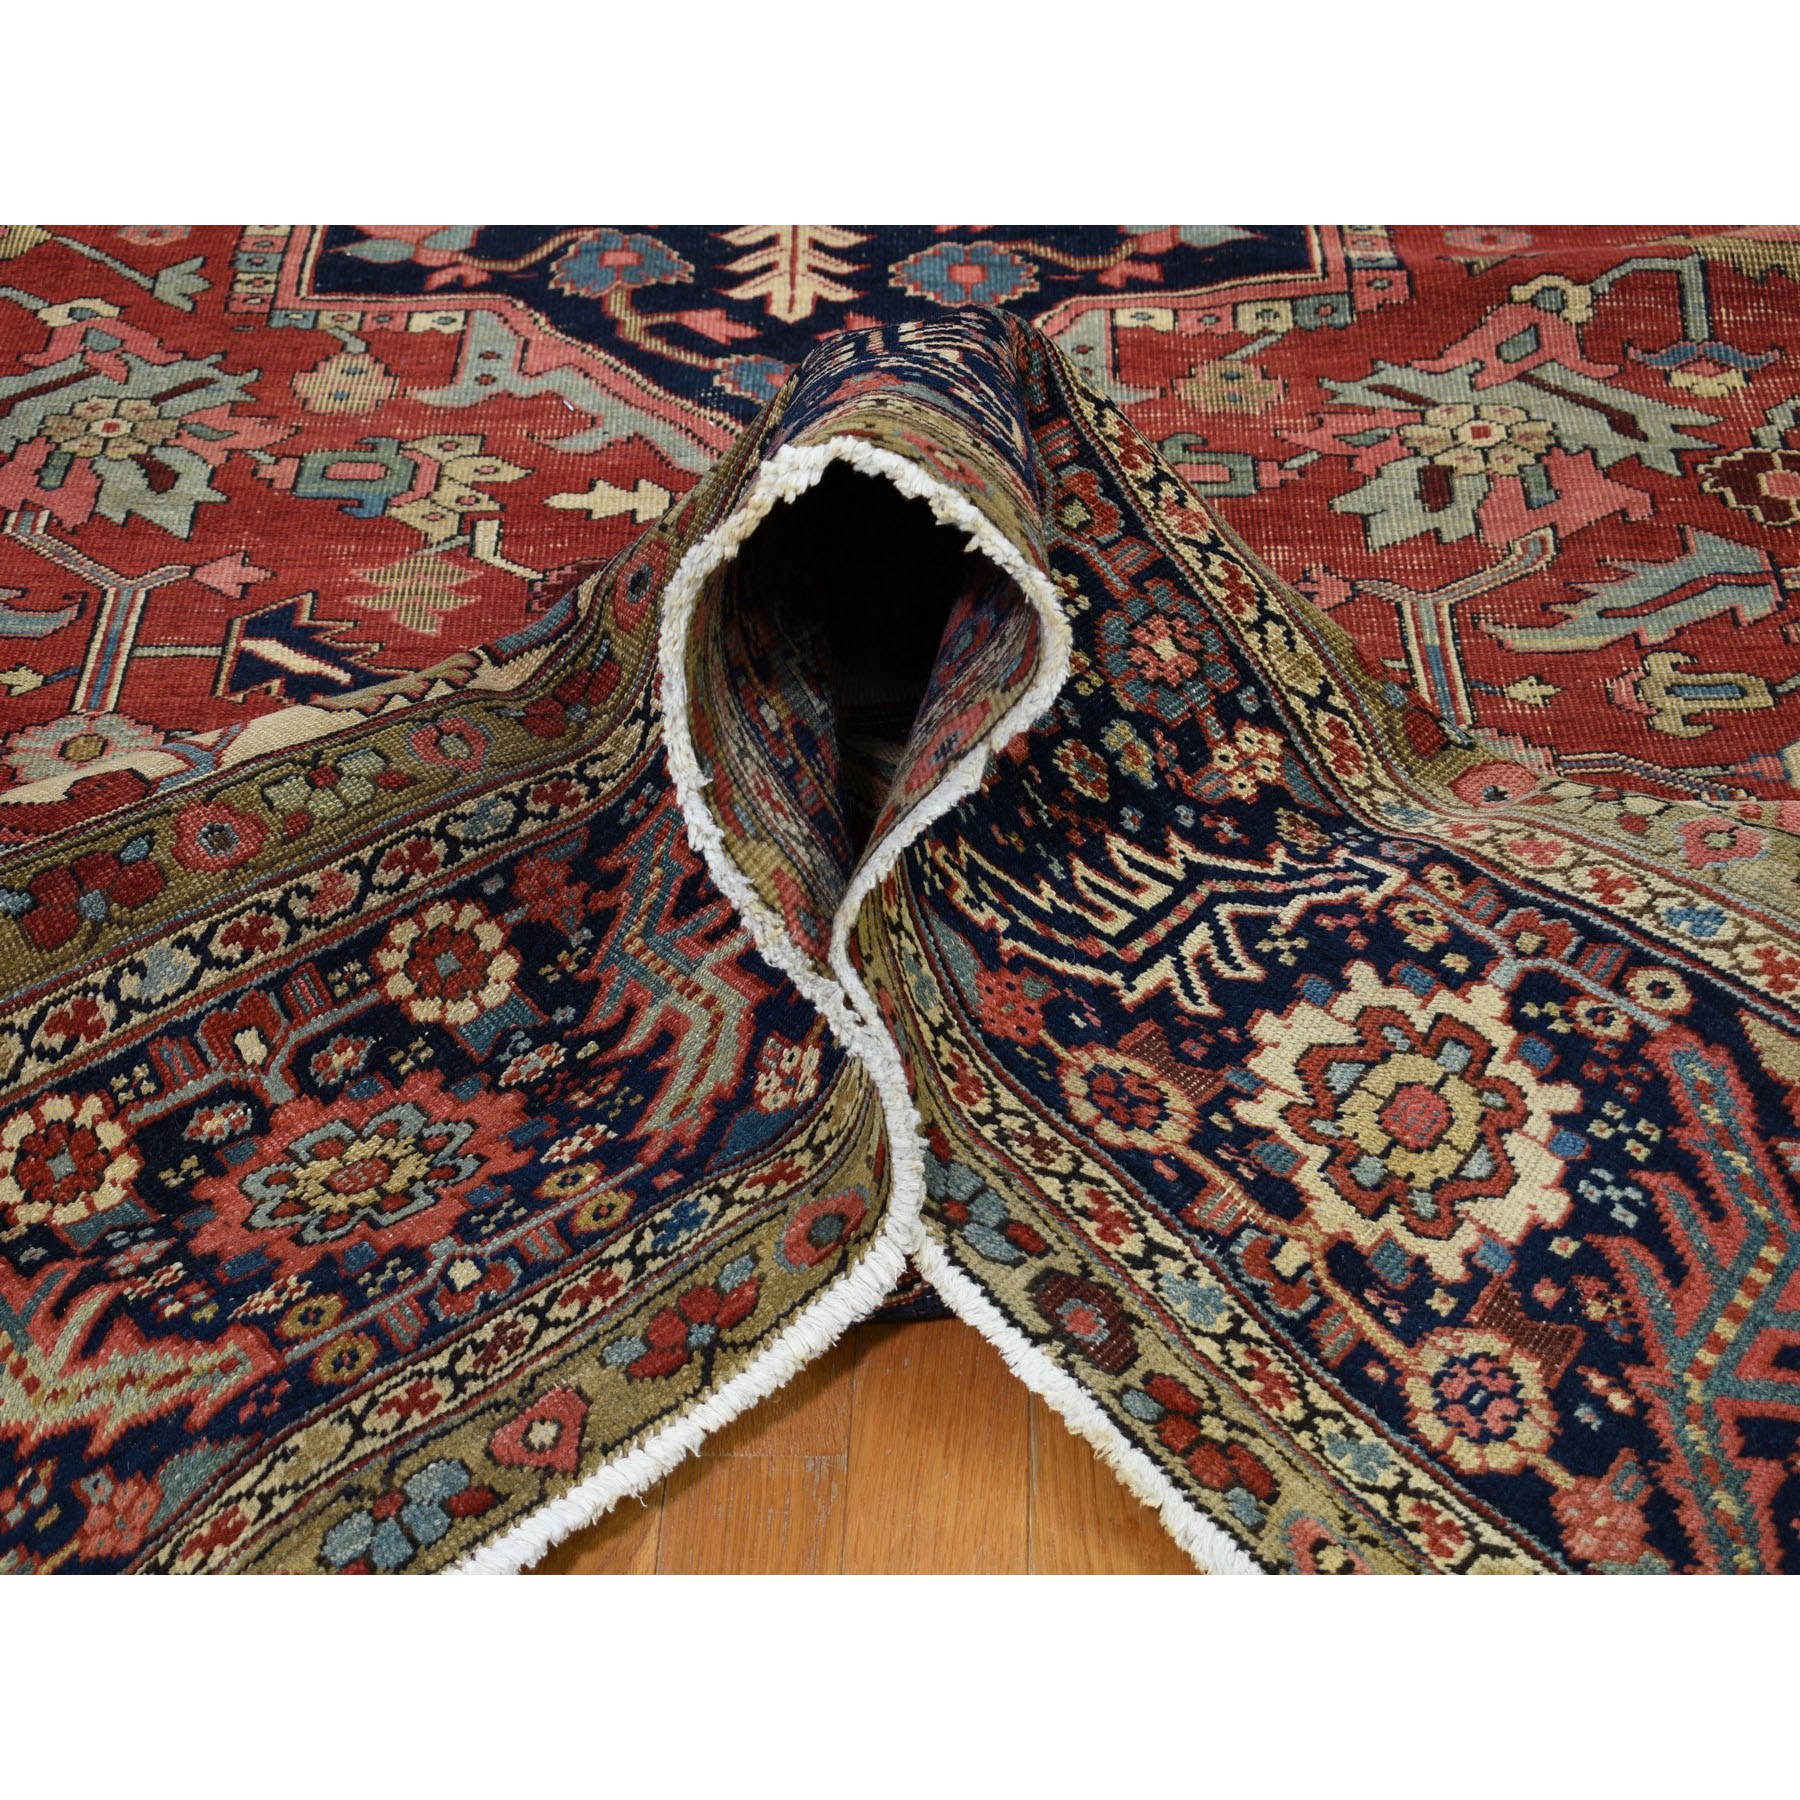 12'1"x19'5" Large Size Original Antique Persian Serapi Heriz Some Wear Clean Hand Woven Oriental Rug 